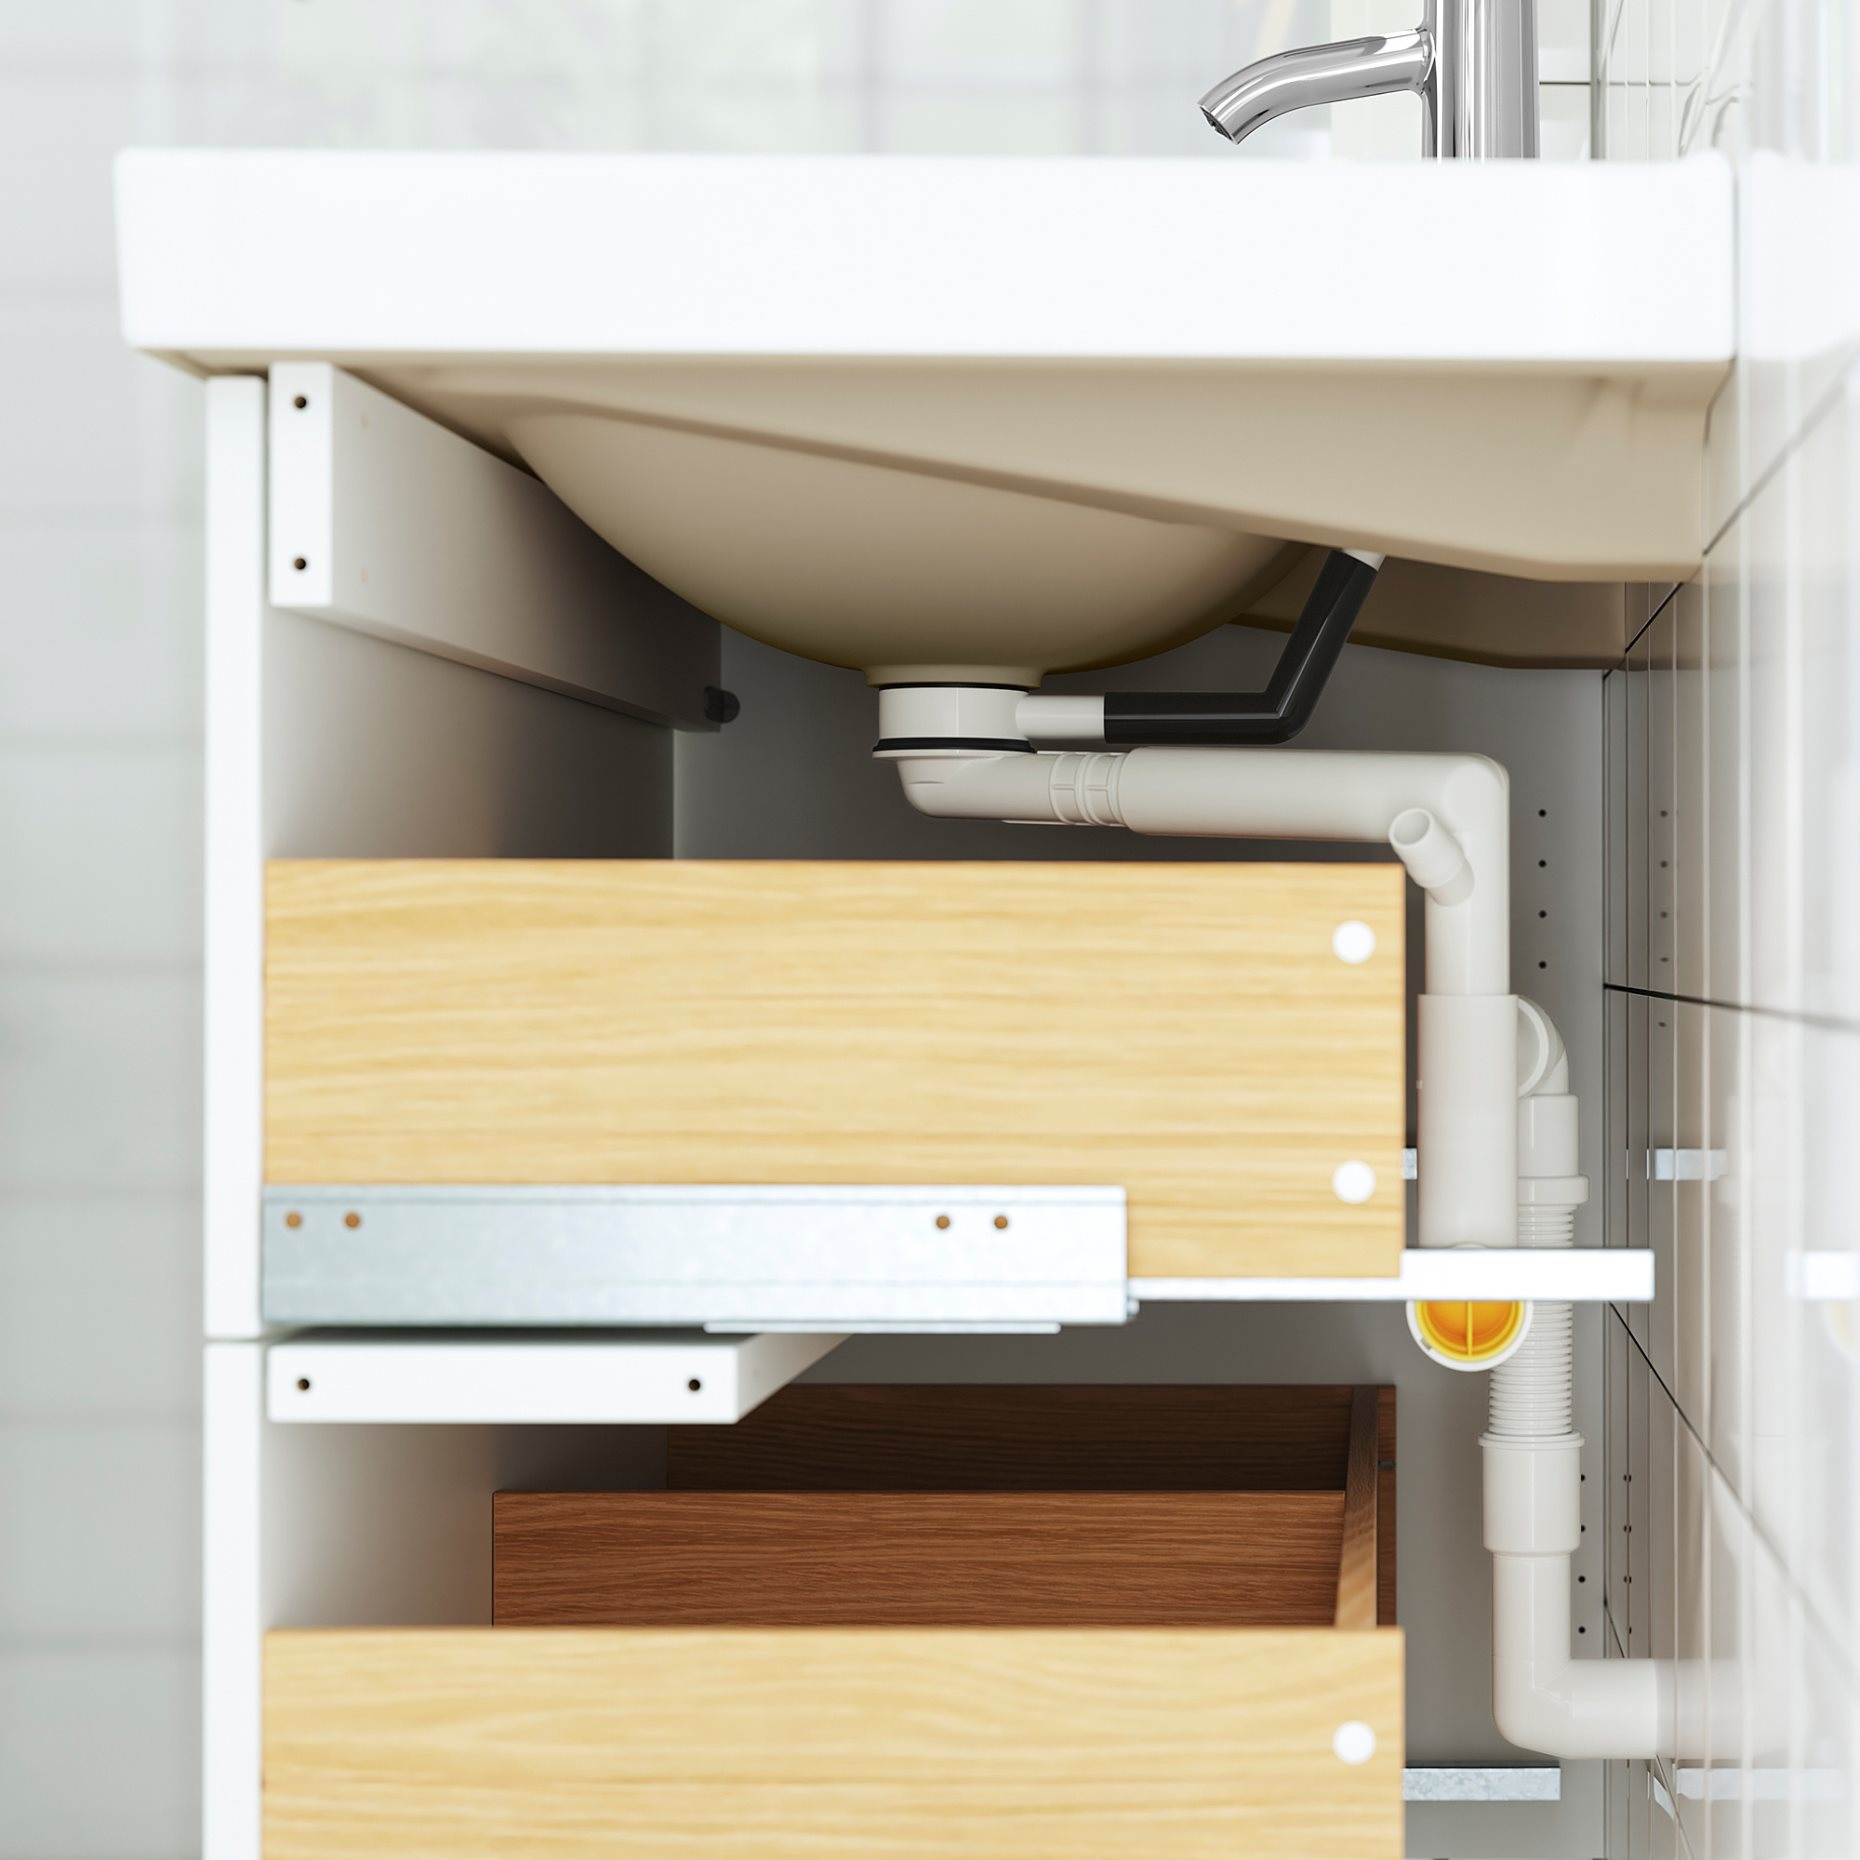 ANGSJON/KATTEVIK, wash-stand with drawers/wash-basin/tap, 82x49x80 cm, 895.214.12